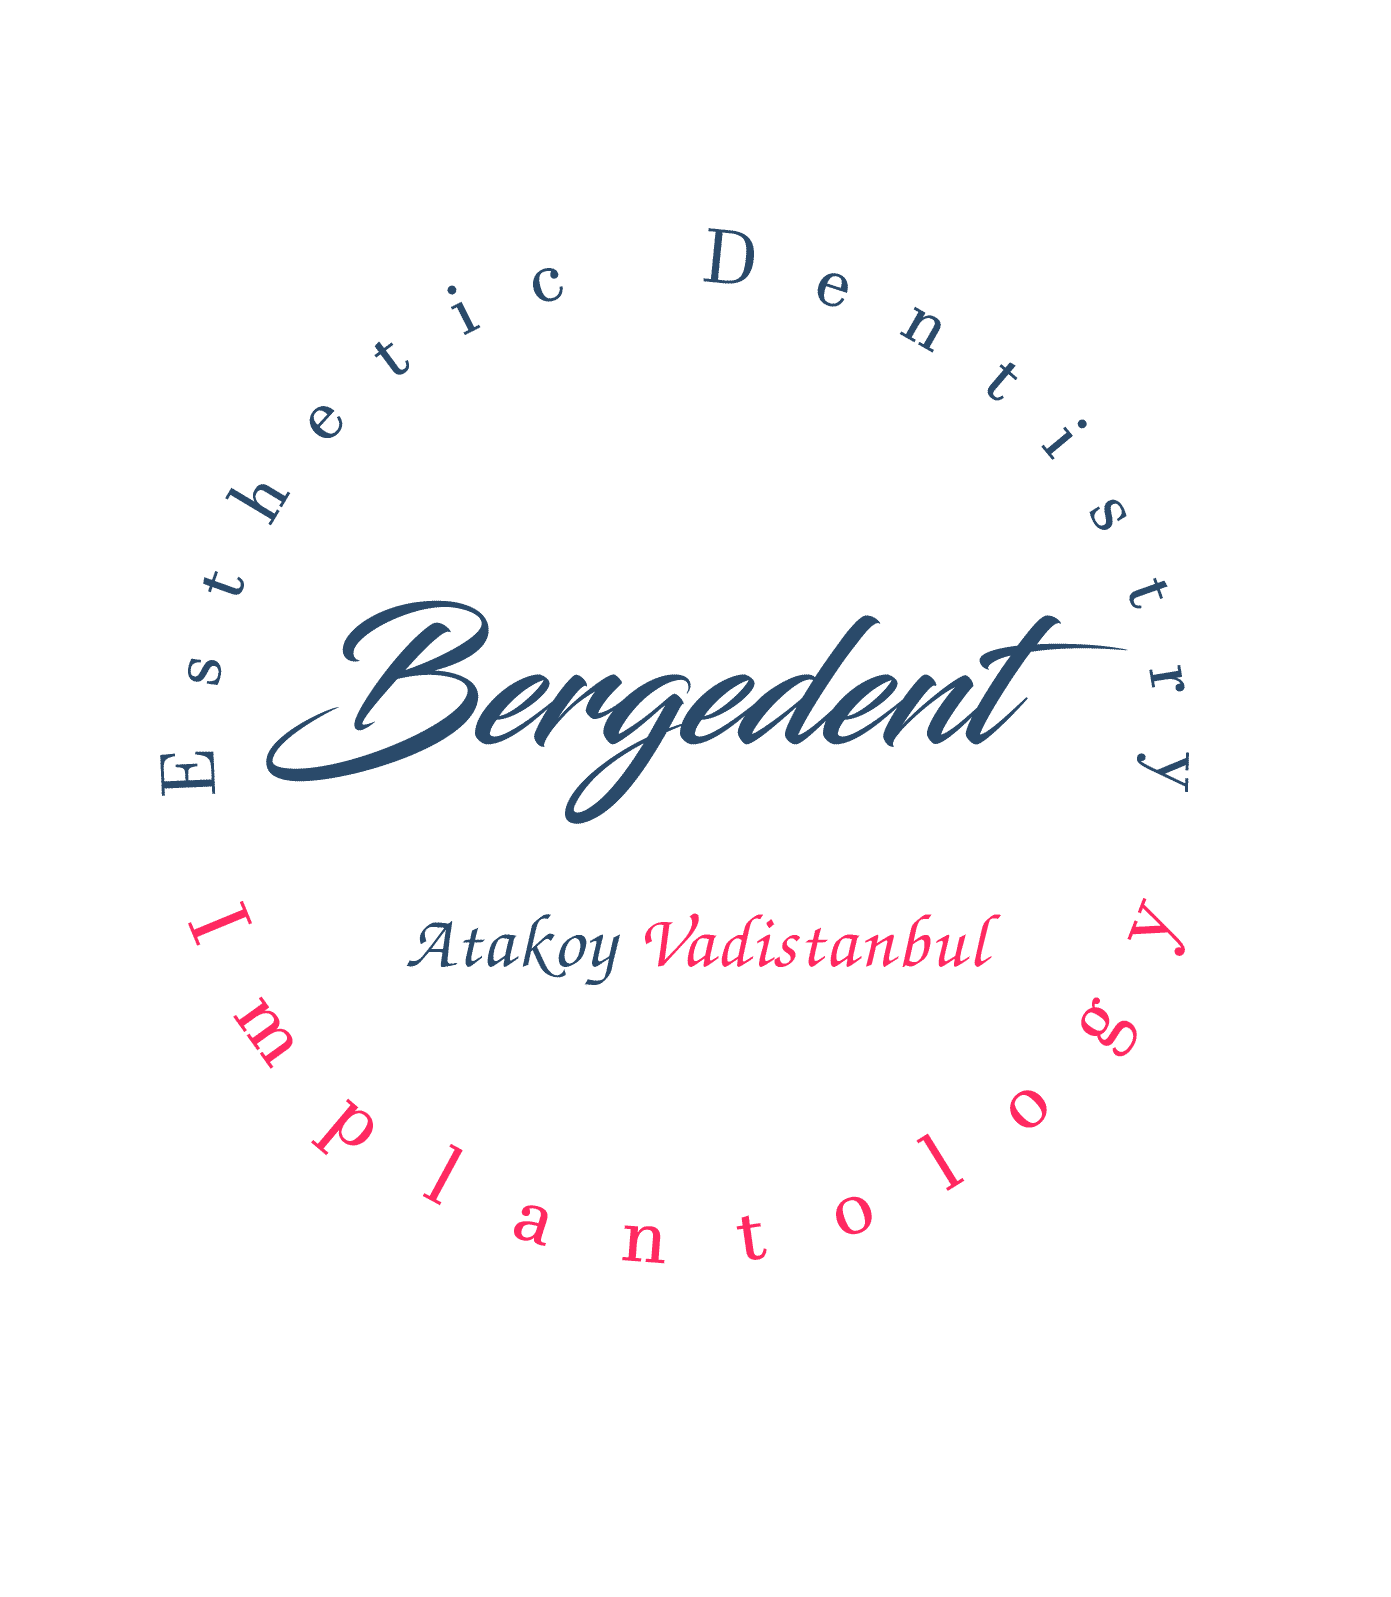 Patient Testimonials: Dental Implants in Istanbul Turkey by Bergedent